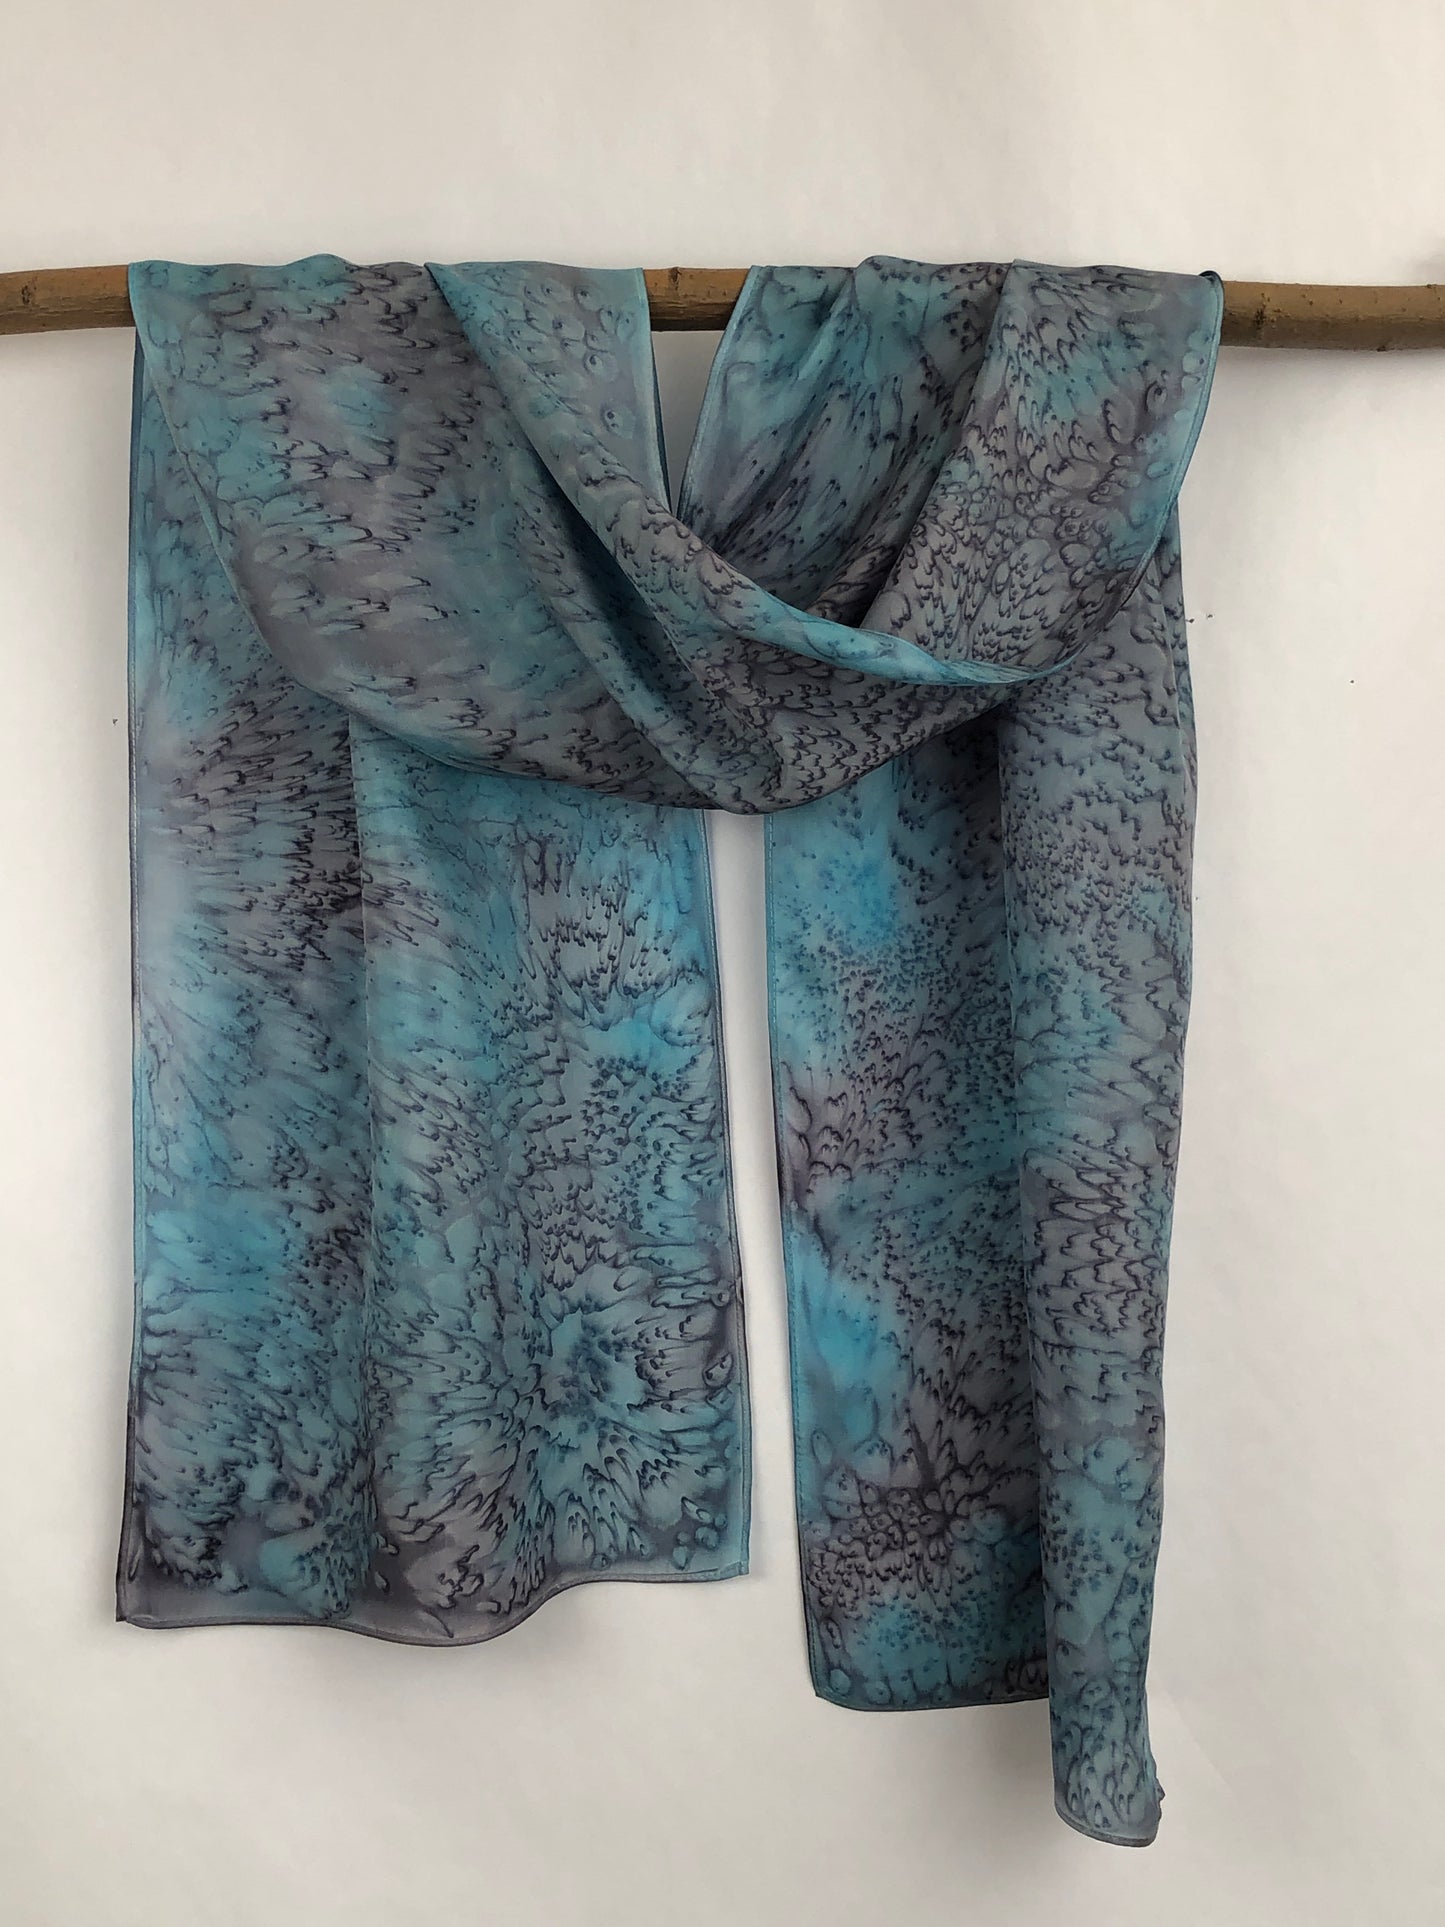 “Snow Storm Mermaid" - Hand-dyed Silk Scarf - $115